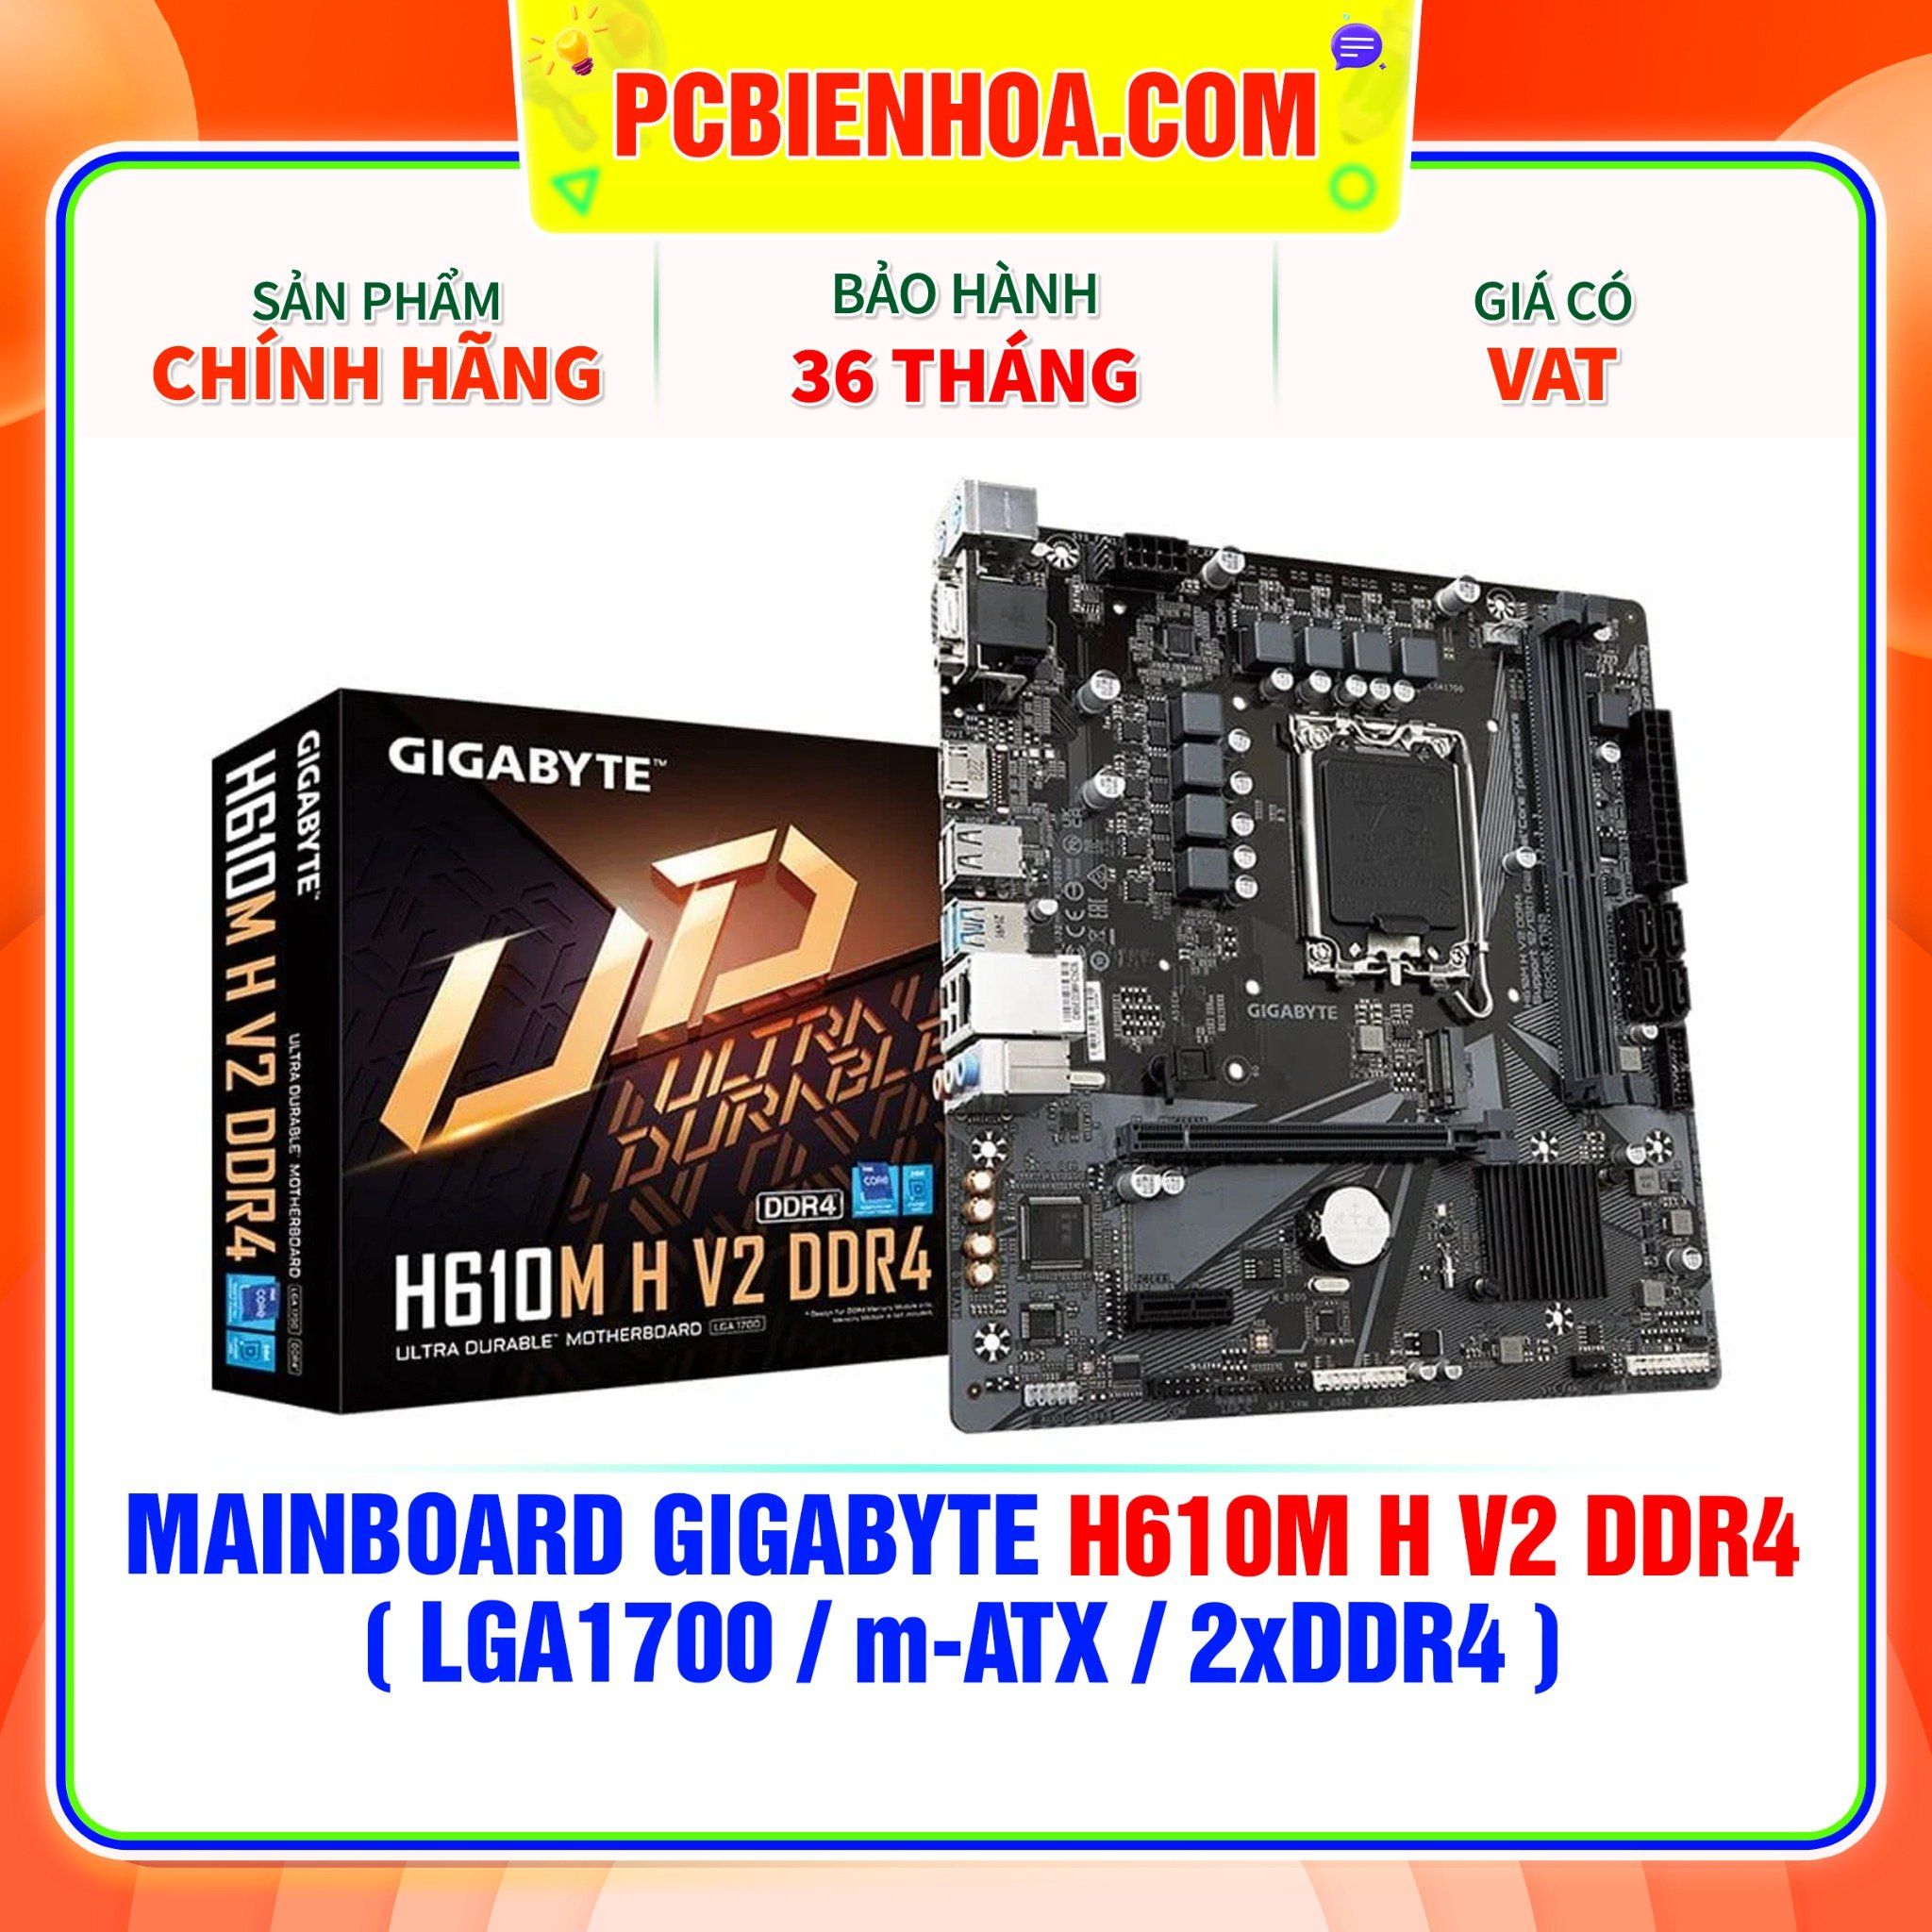  MAINBOARD GIGABYTE H610M H V2 DDR4 ( LGA1700 / m-ATX / 2xDDR4 ) 